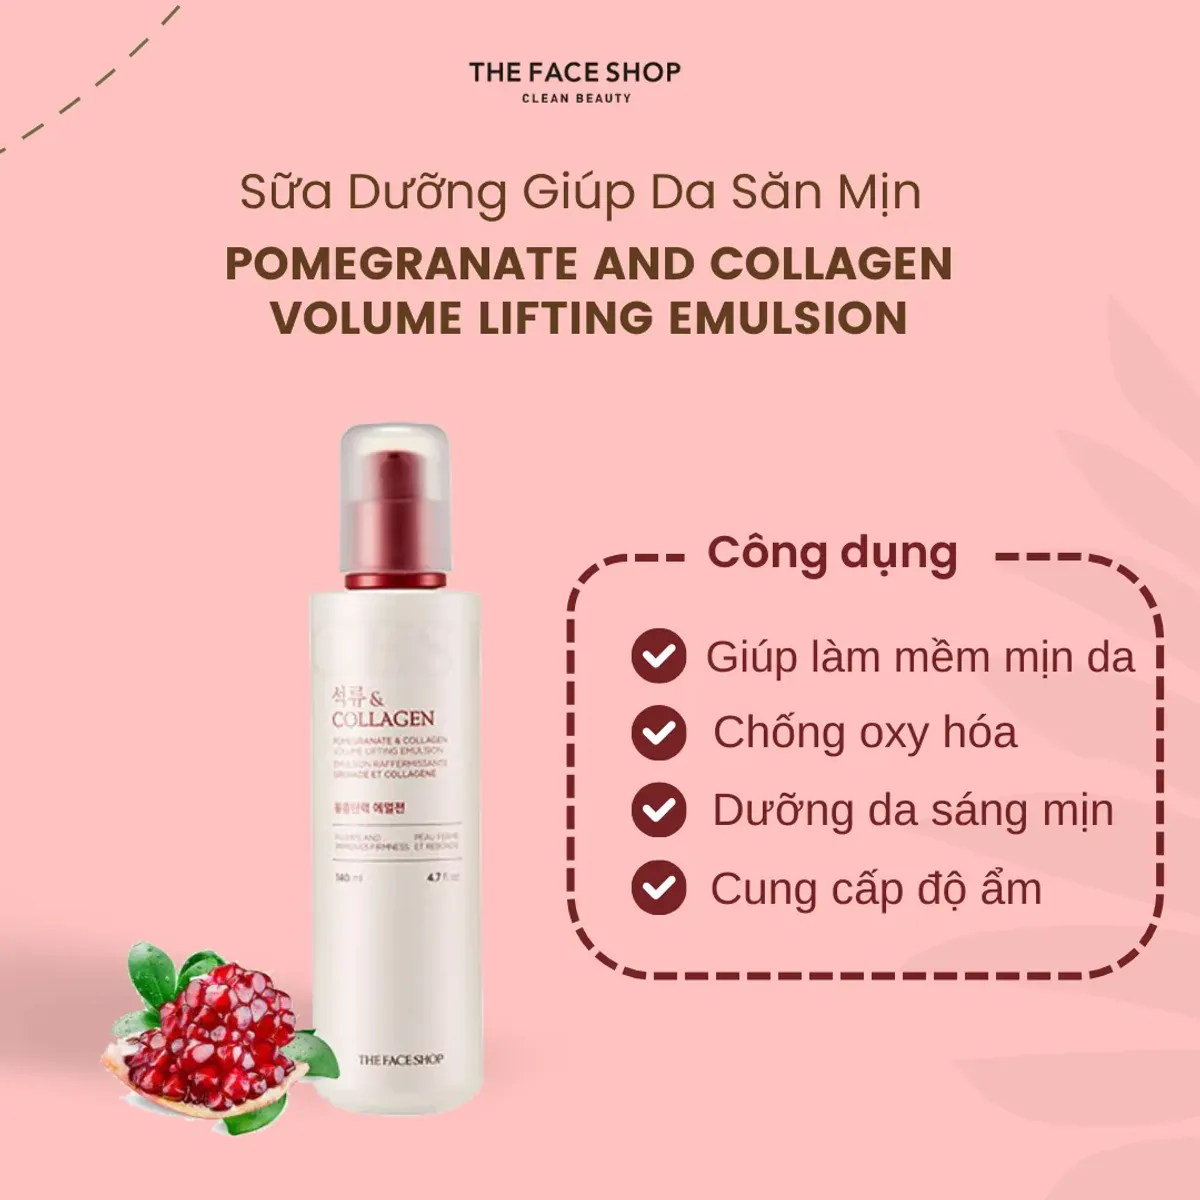 sua-duong-giup-da-san-min-pomegranate-and-collagen-volume-lifting-emulsion-4